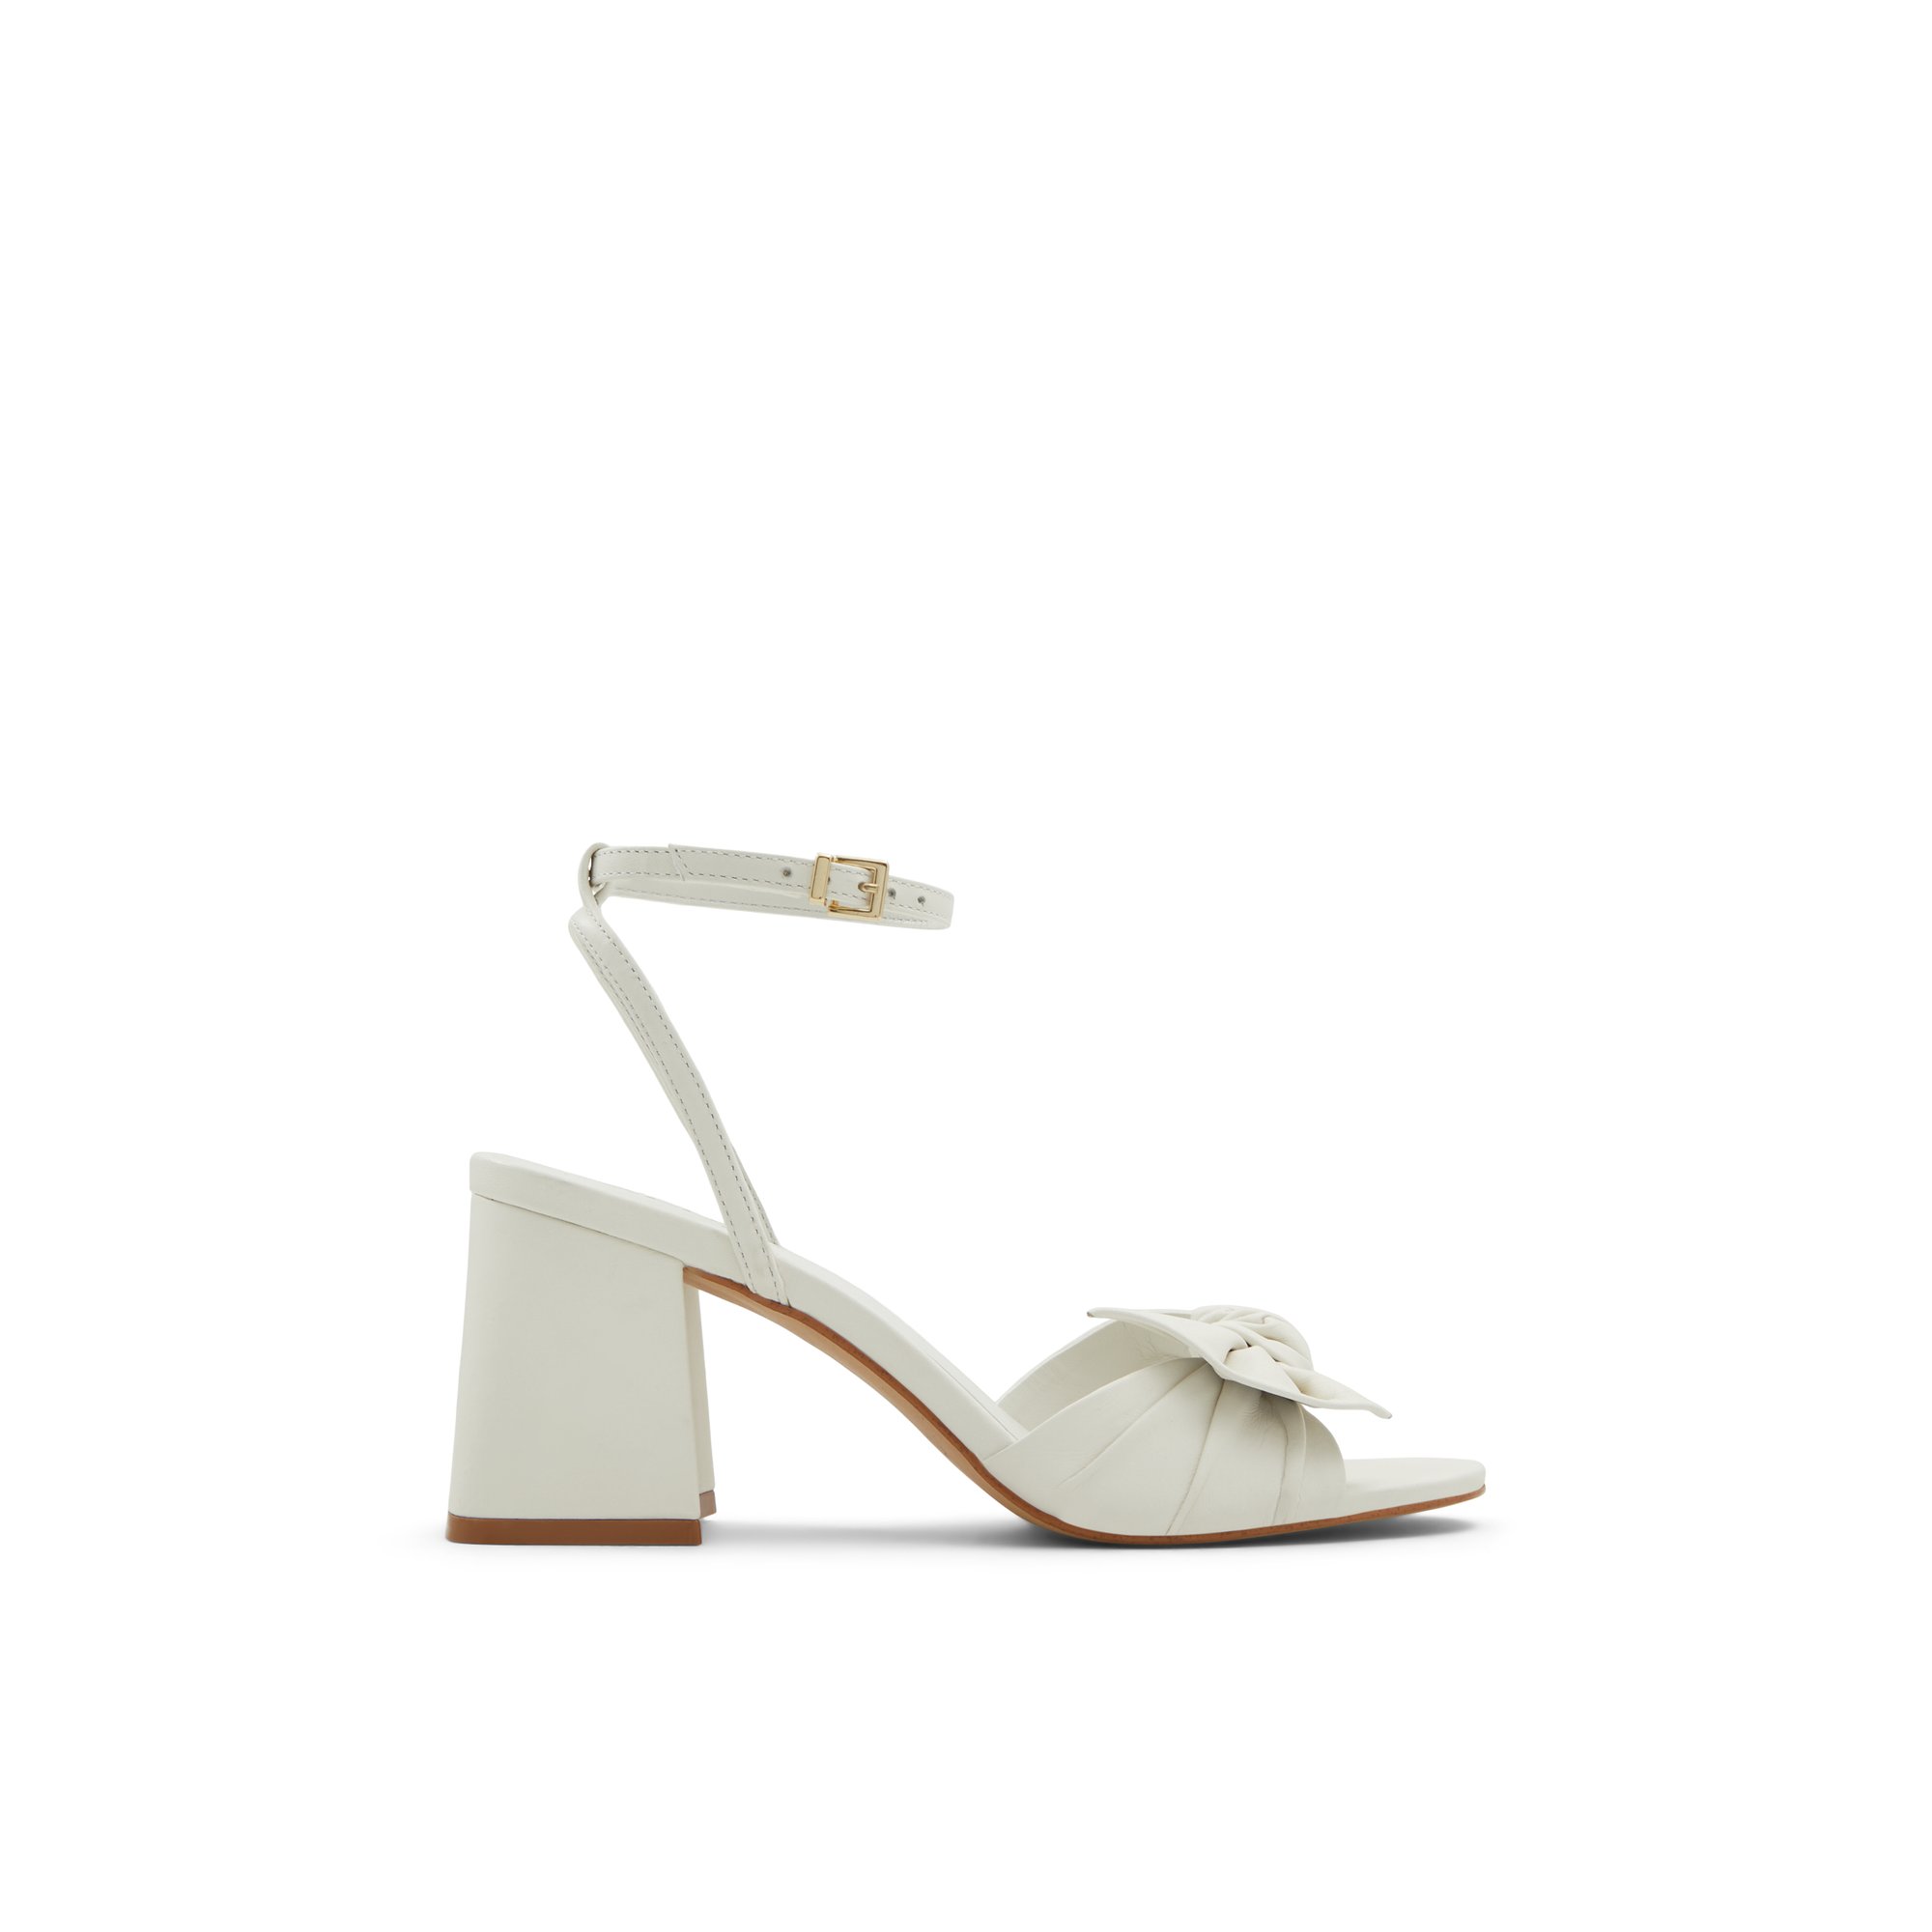 ALDO Angelbow - Women's Sandals Strappy - White